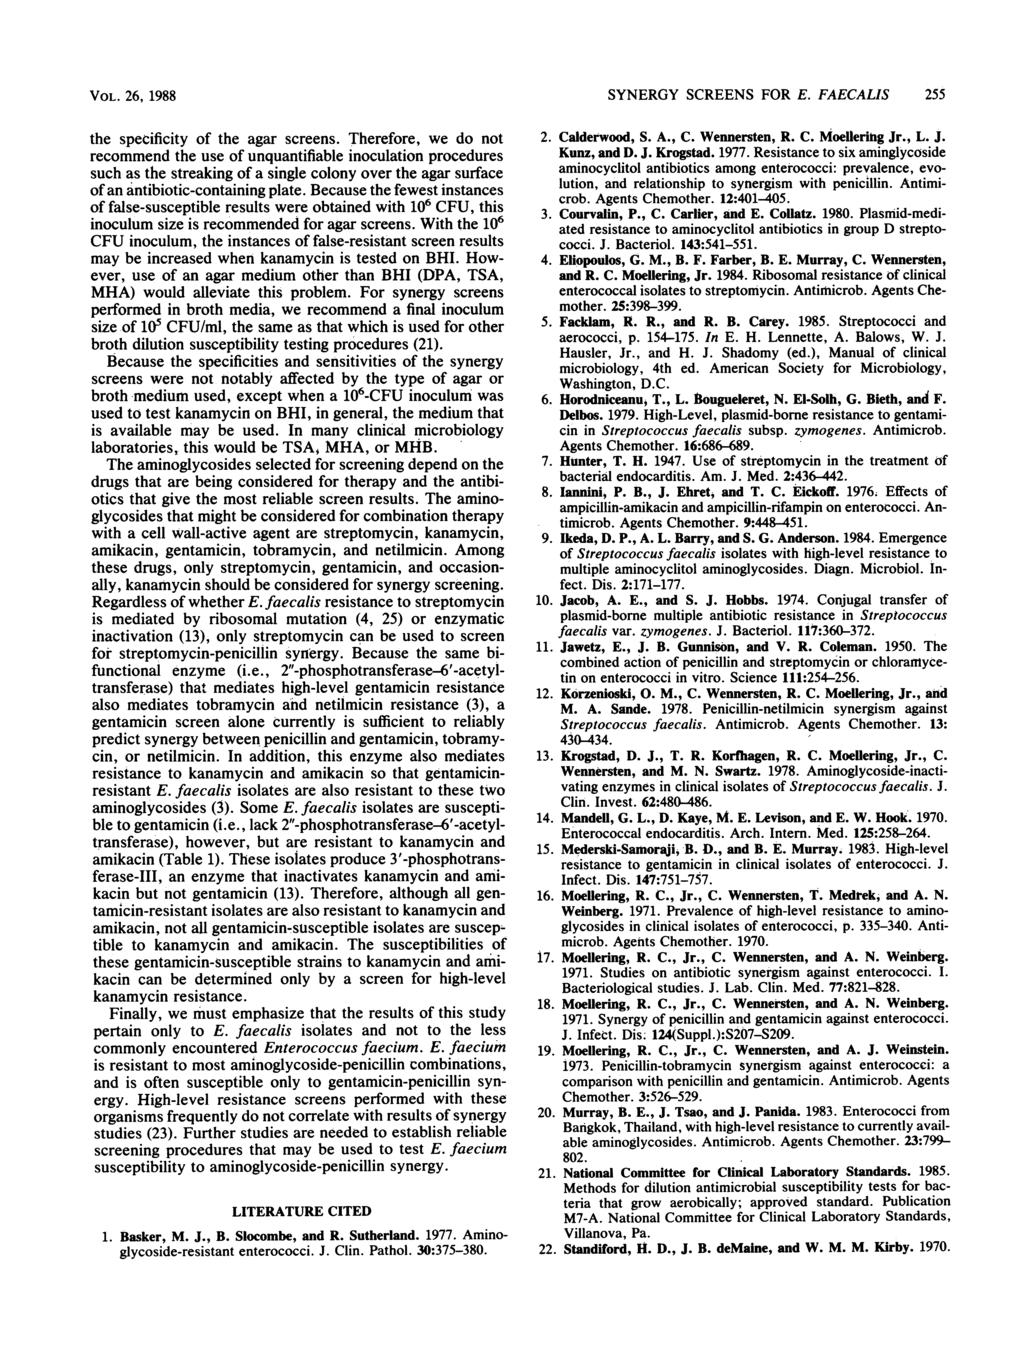 VOL. 26, 1988 the specificity f the agar screens.